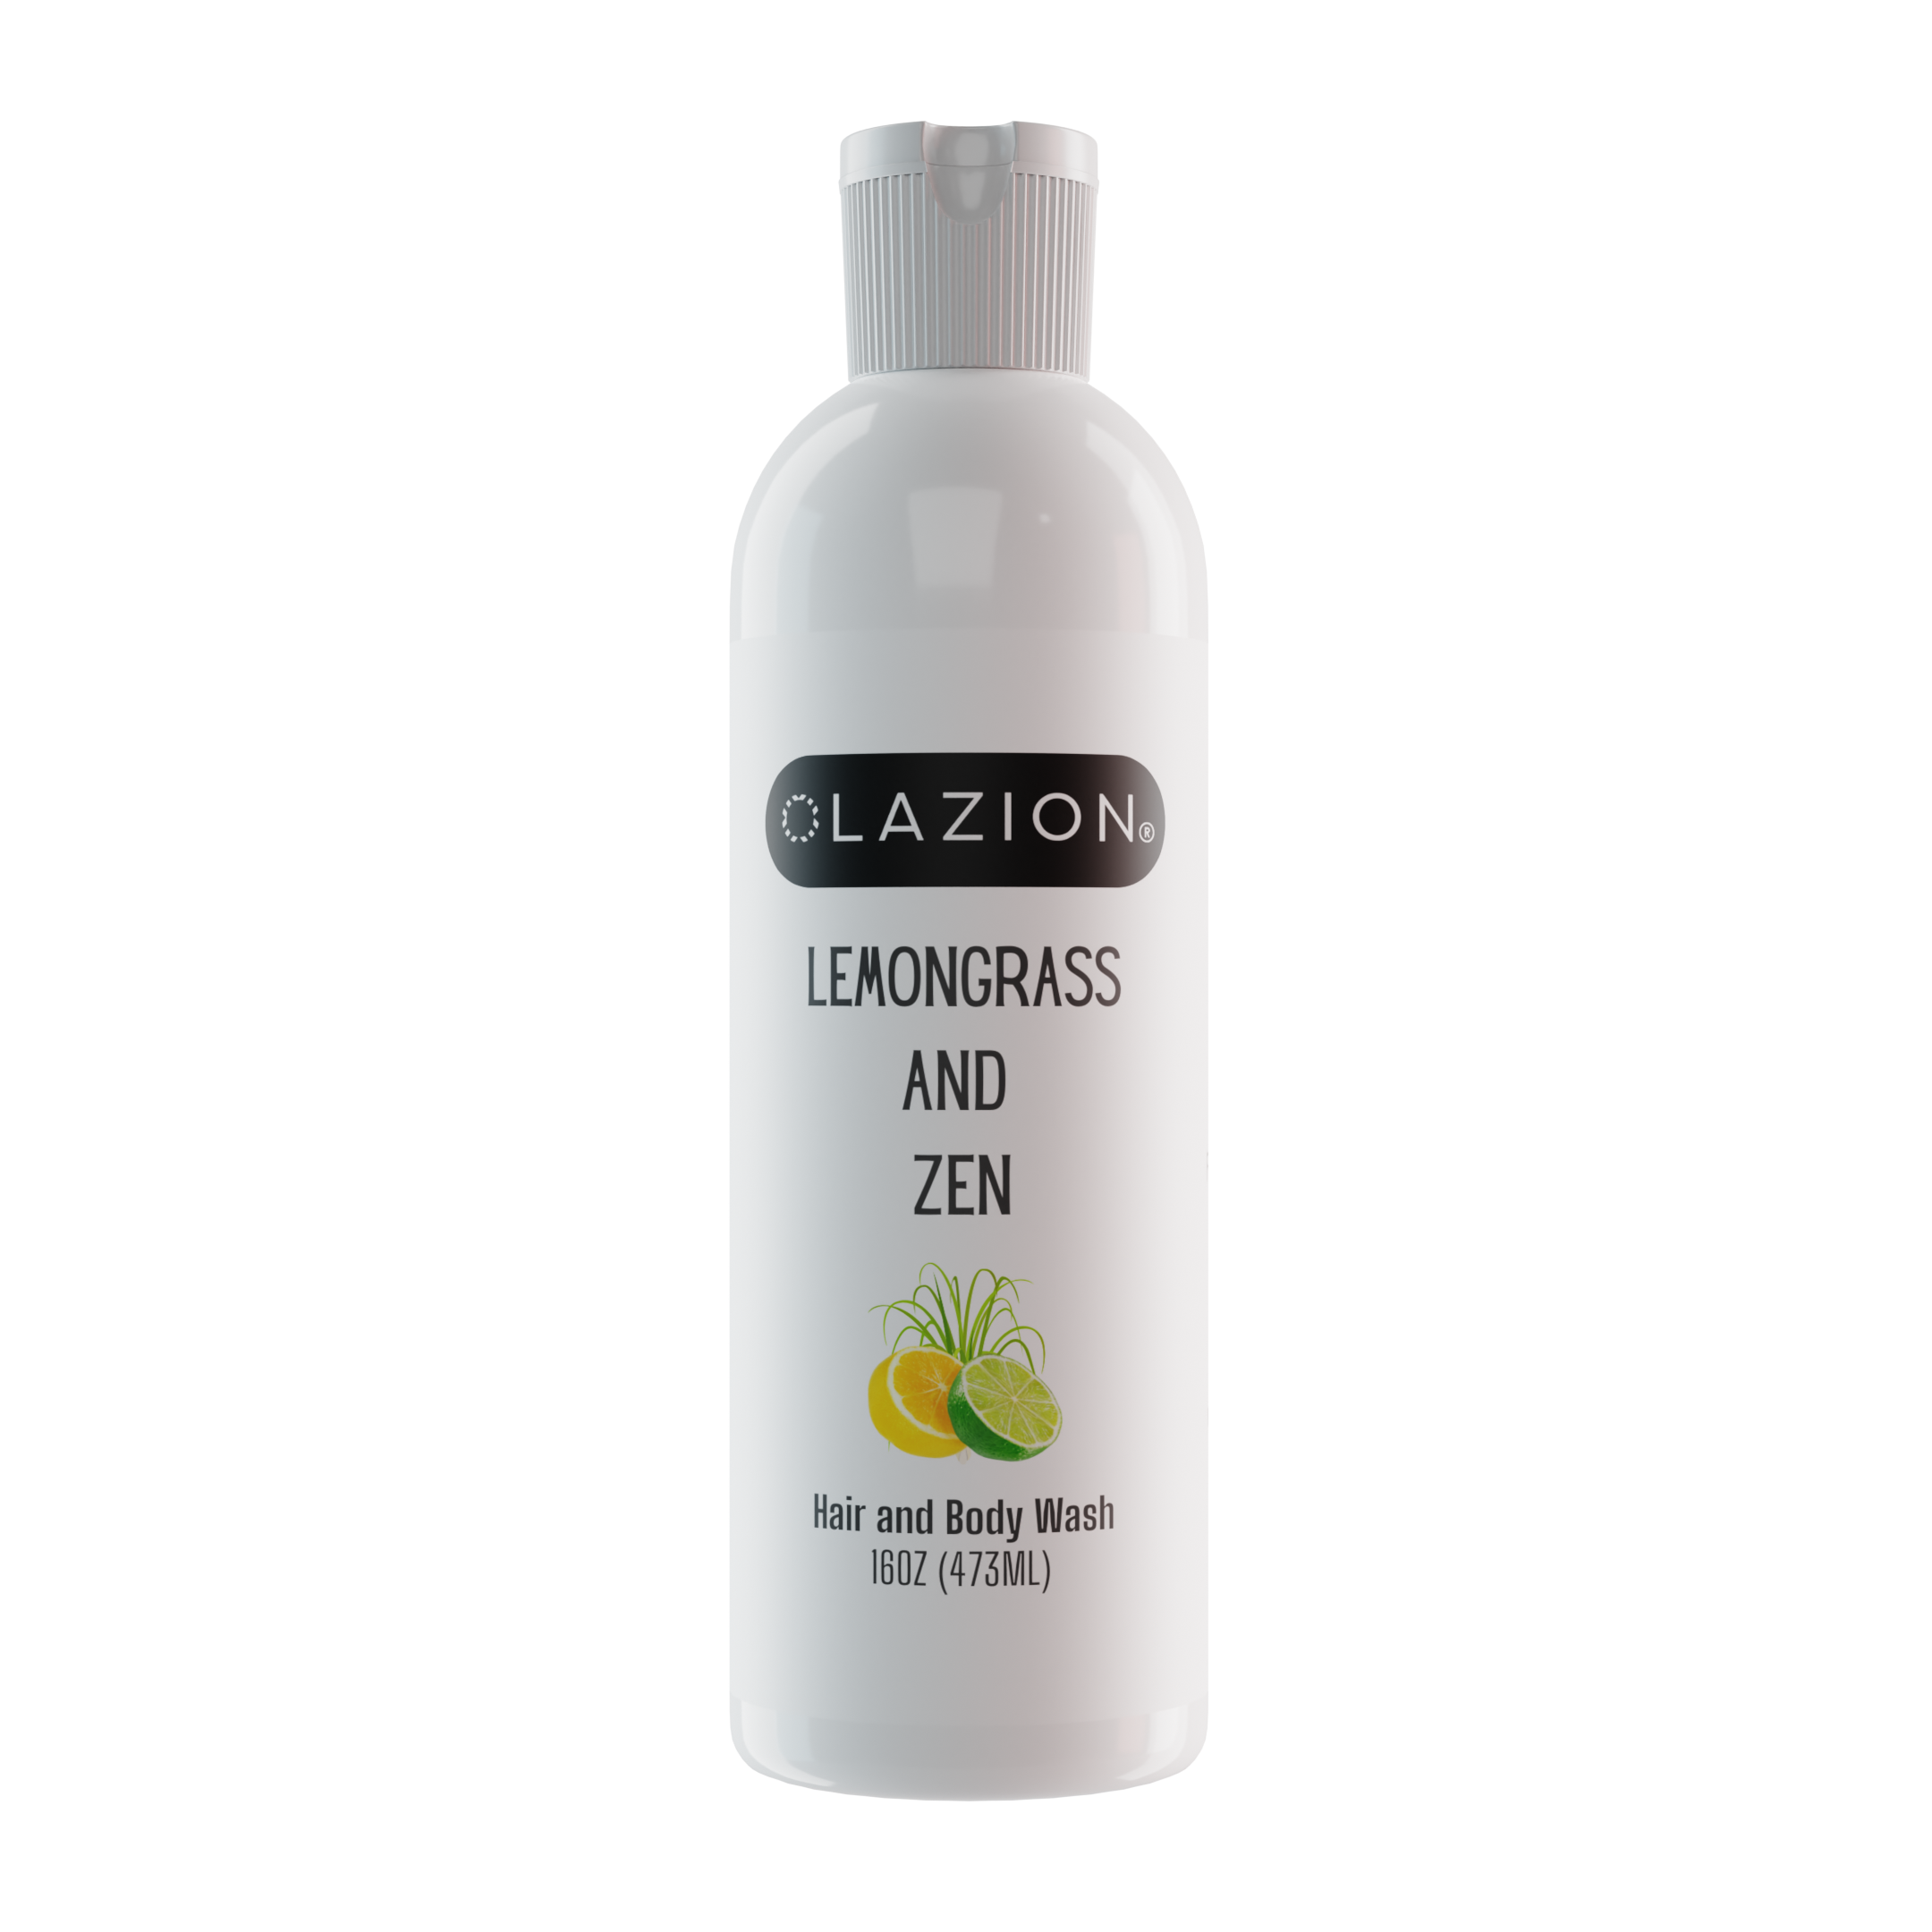 Lemongrass and Zen All Natural "Vegan" Body Wash